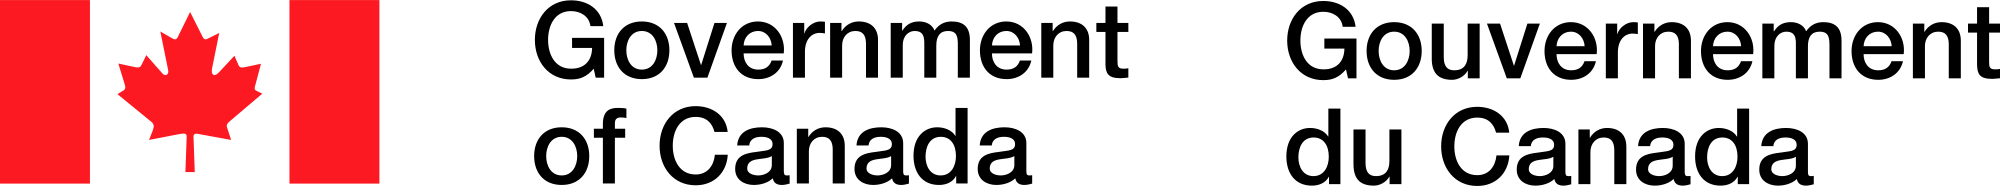 Canada Government Logo - Government of Canada Logo InsuranceRiverstone Insurance